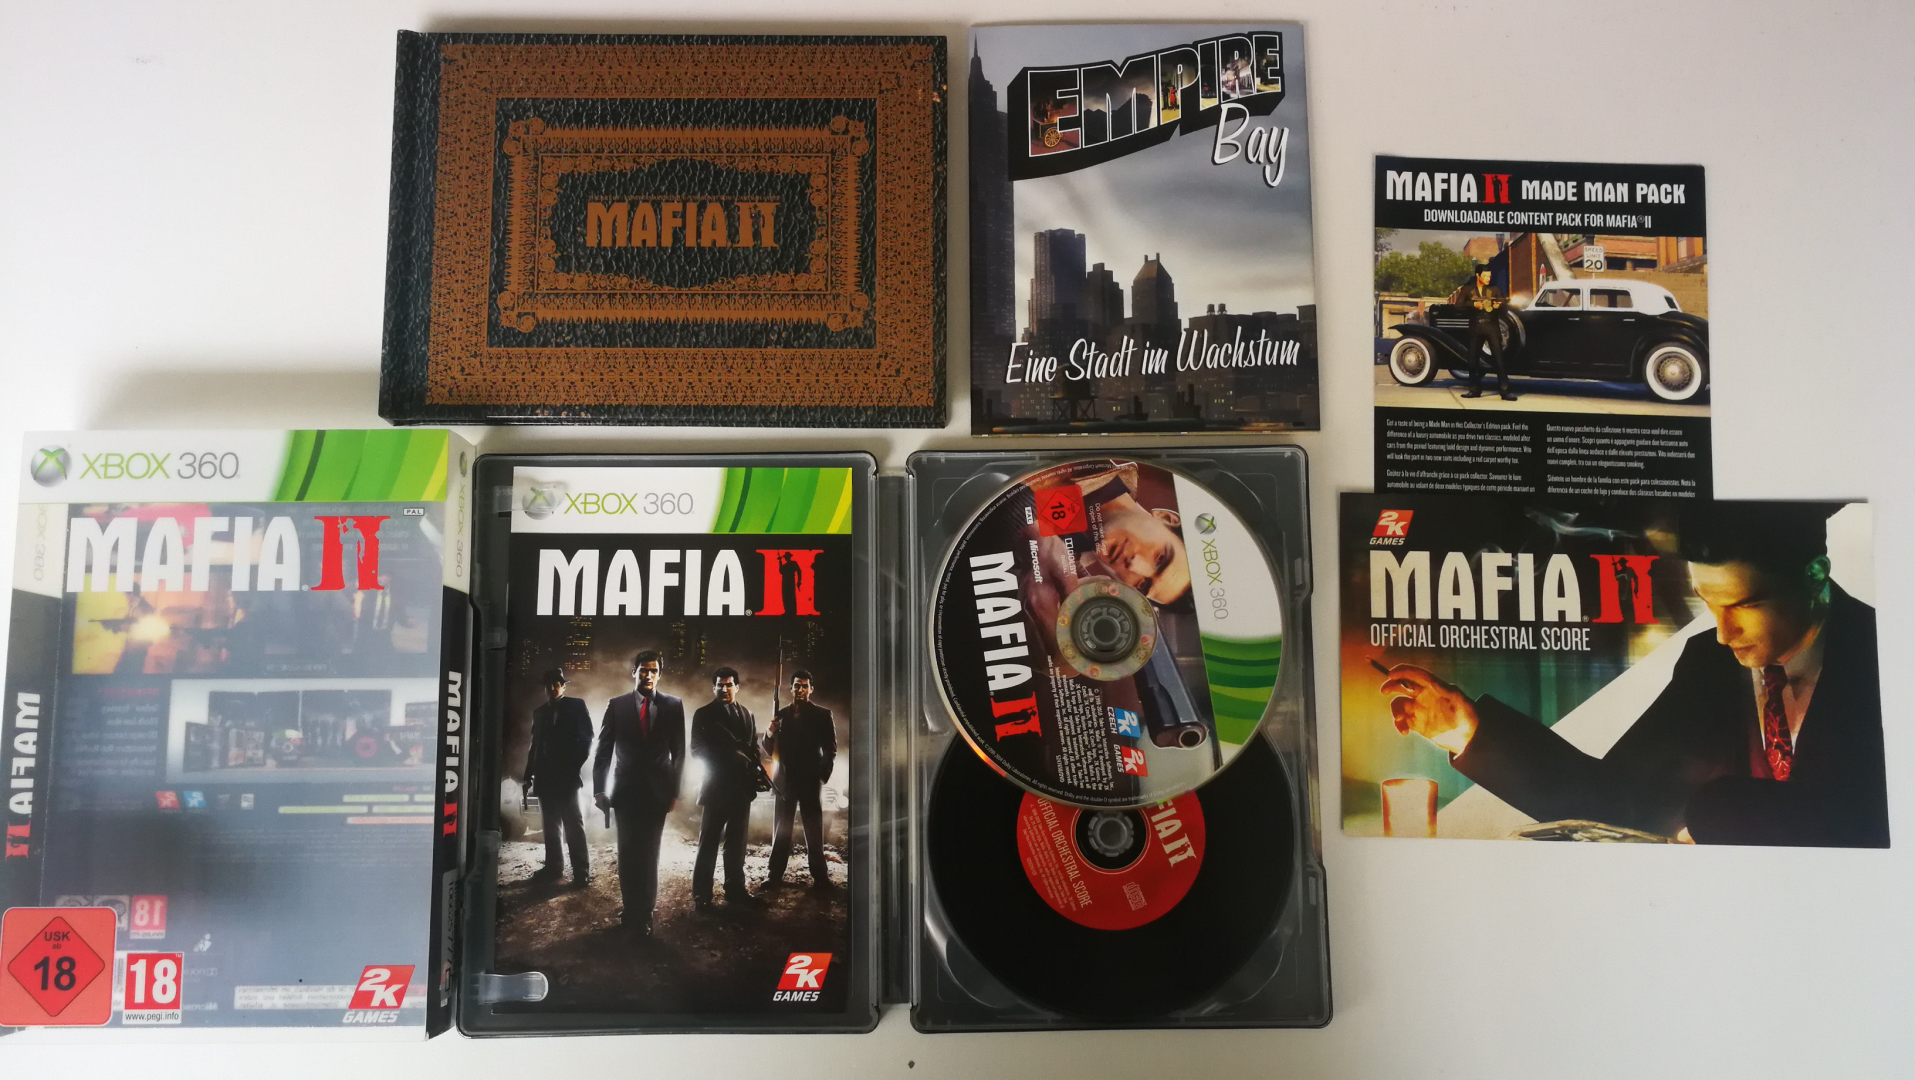 Leegte Veraangenamen Nageslacht Xbox 360 Mafia 2 Mafia II Collector's Edition | Konzoleahry.cz